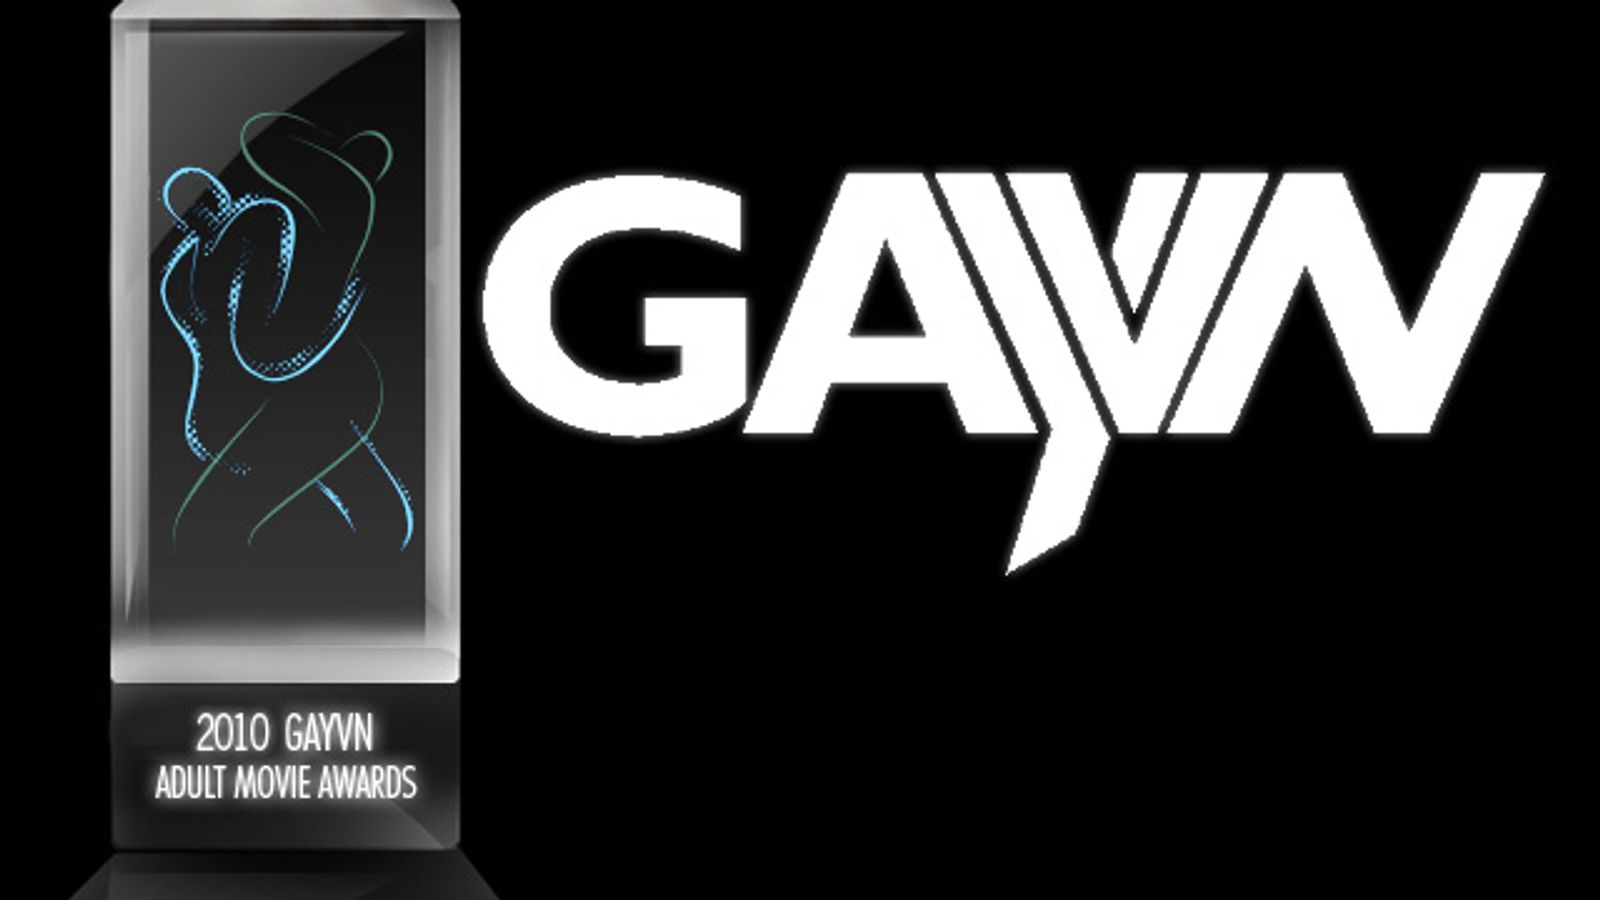 GAYVN Awards: The Show Will Go On